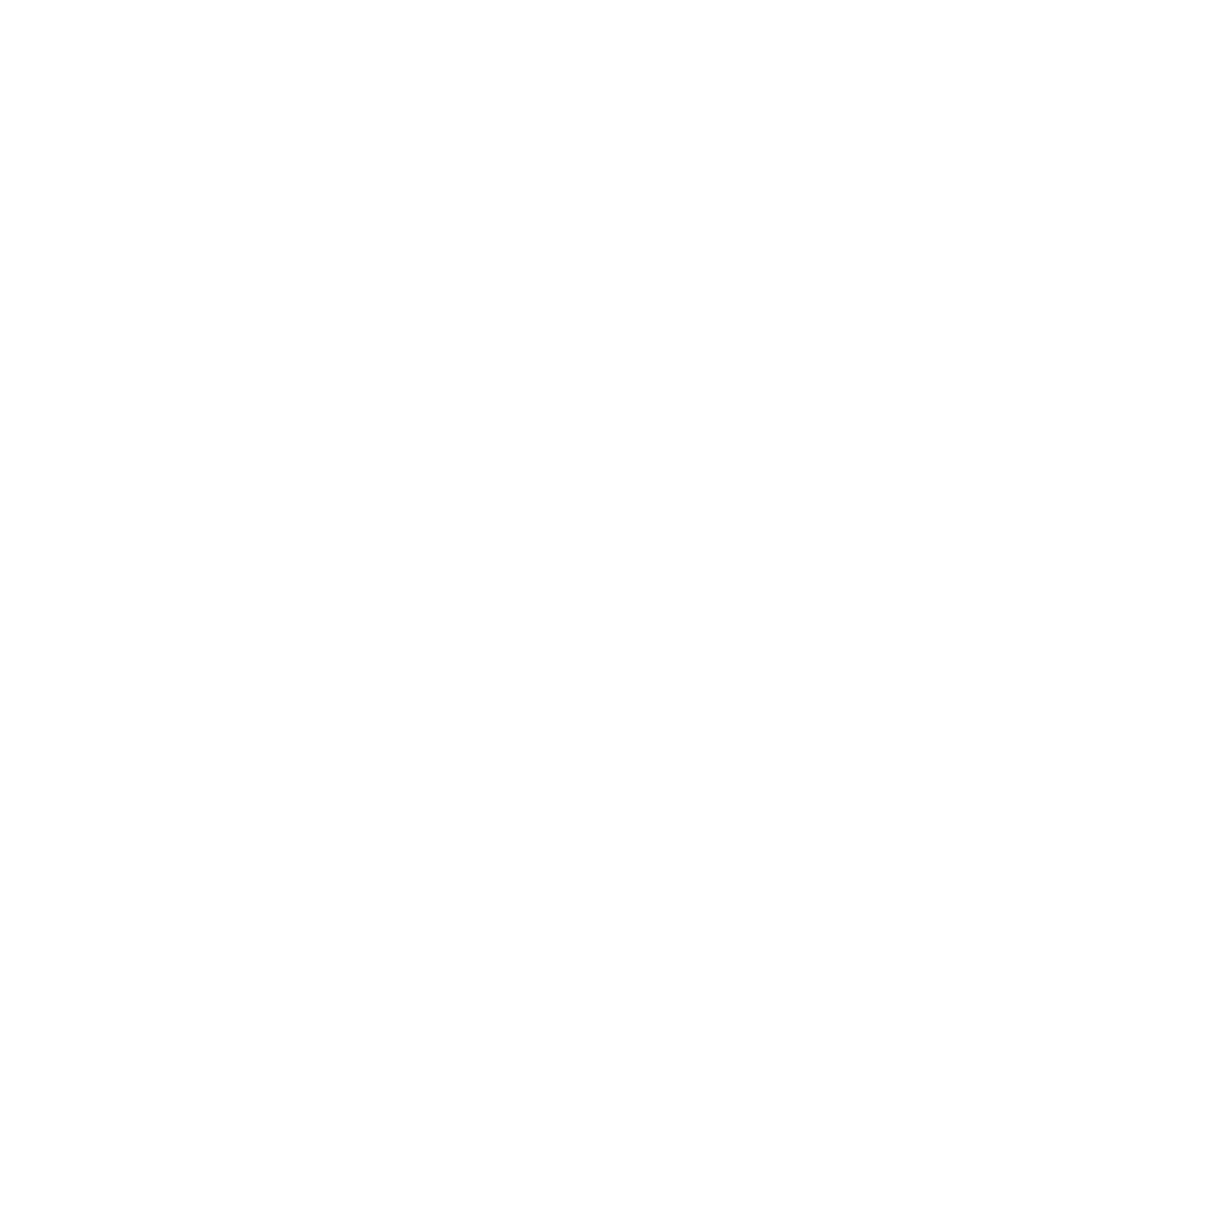 Big G Logo - Home G Creative